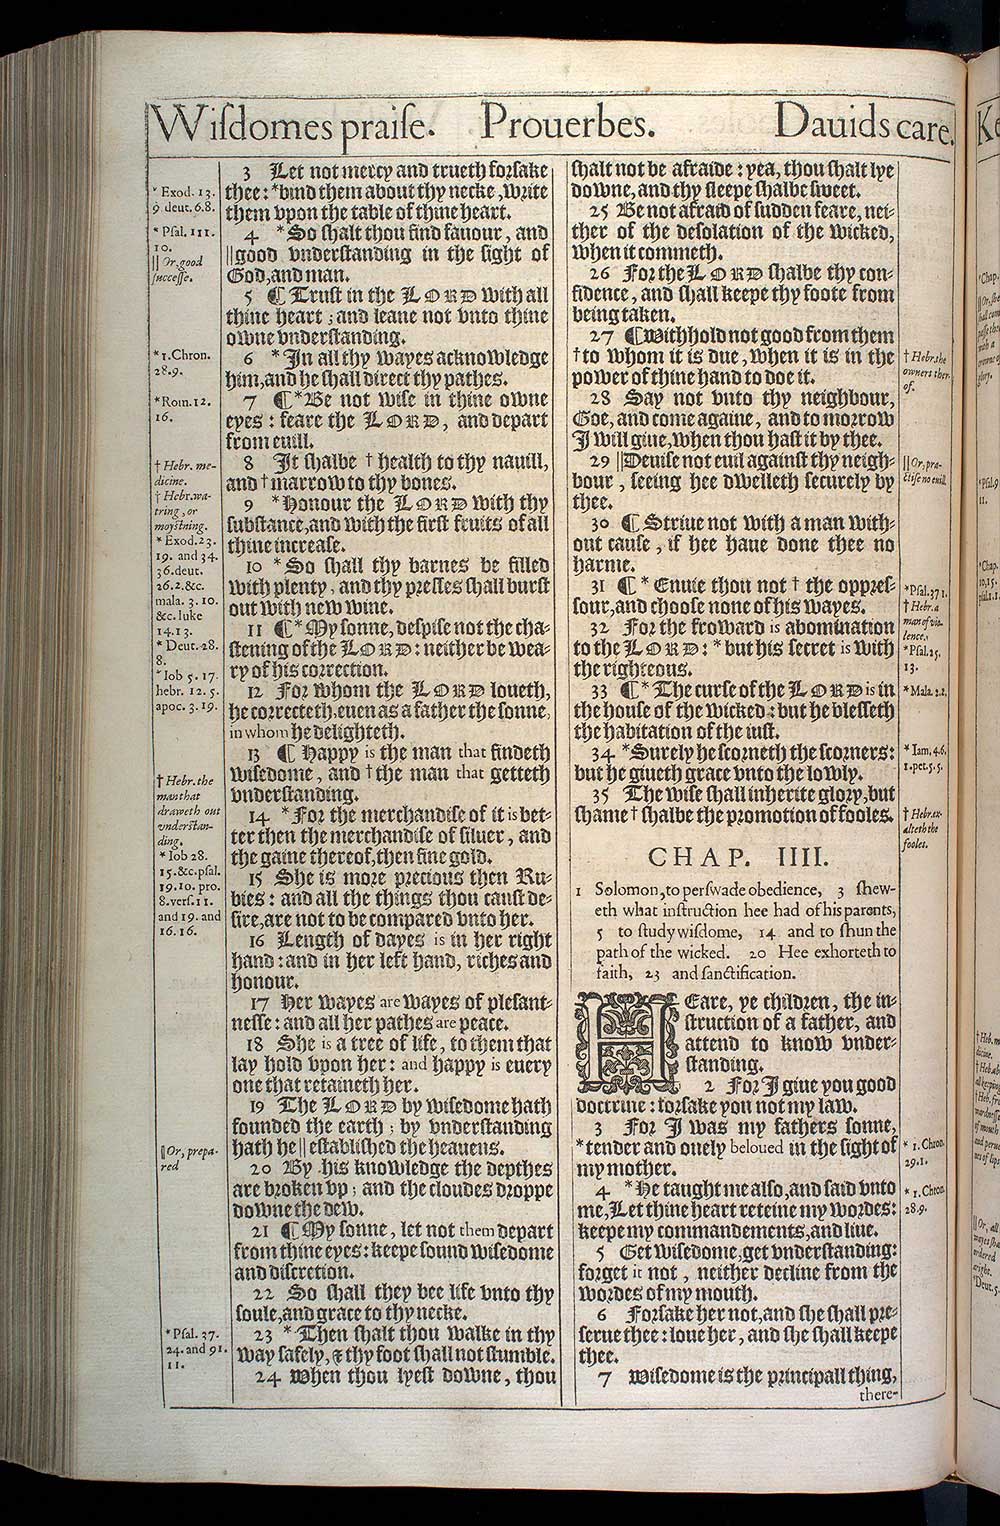 Proverbs Chapter 3 Original 1611 Bible Scan